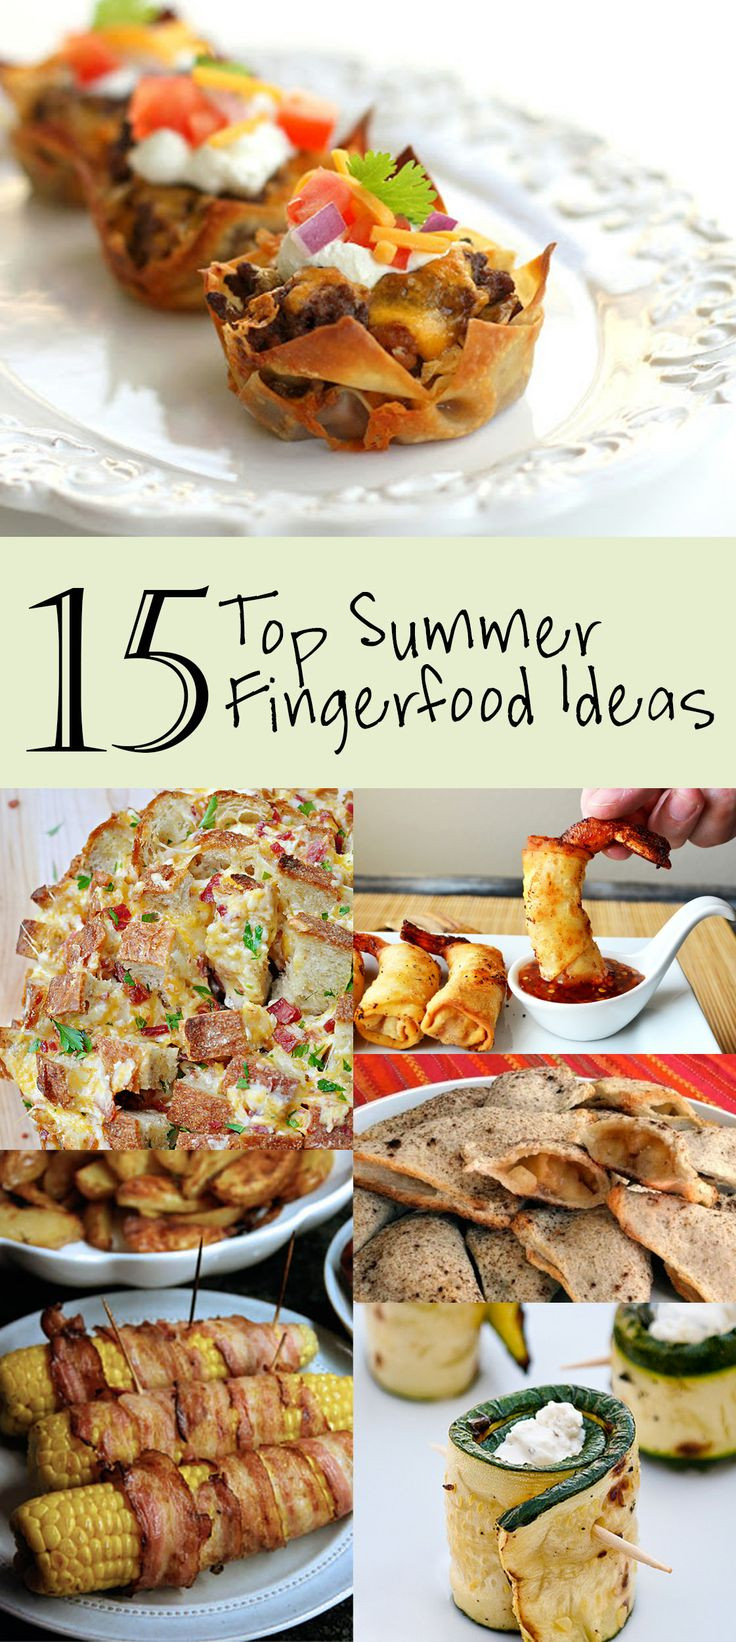 Finger Food Ideas For Summer Party
 Best 25 Summer finger foods ideas on Pinterest